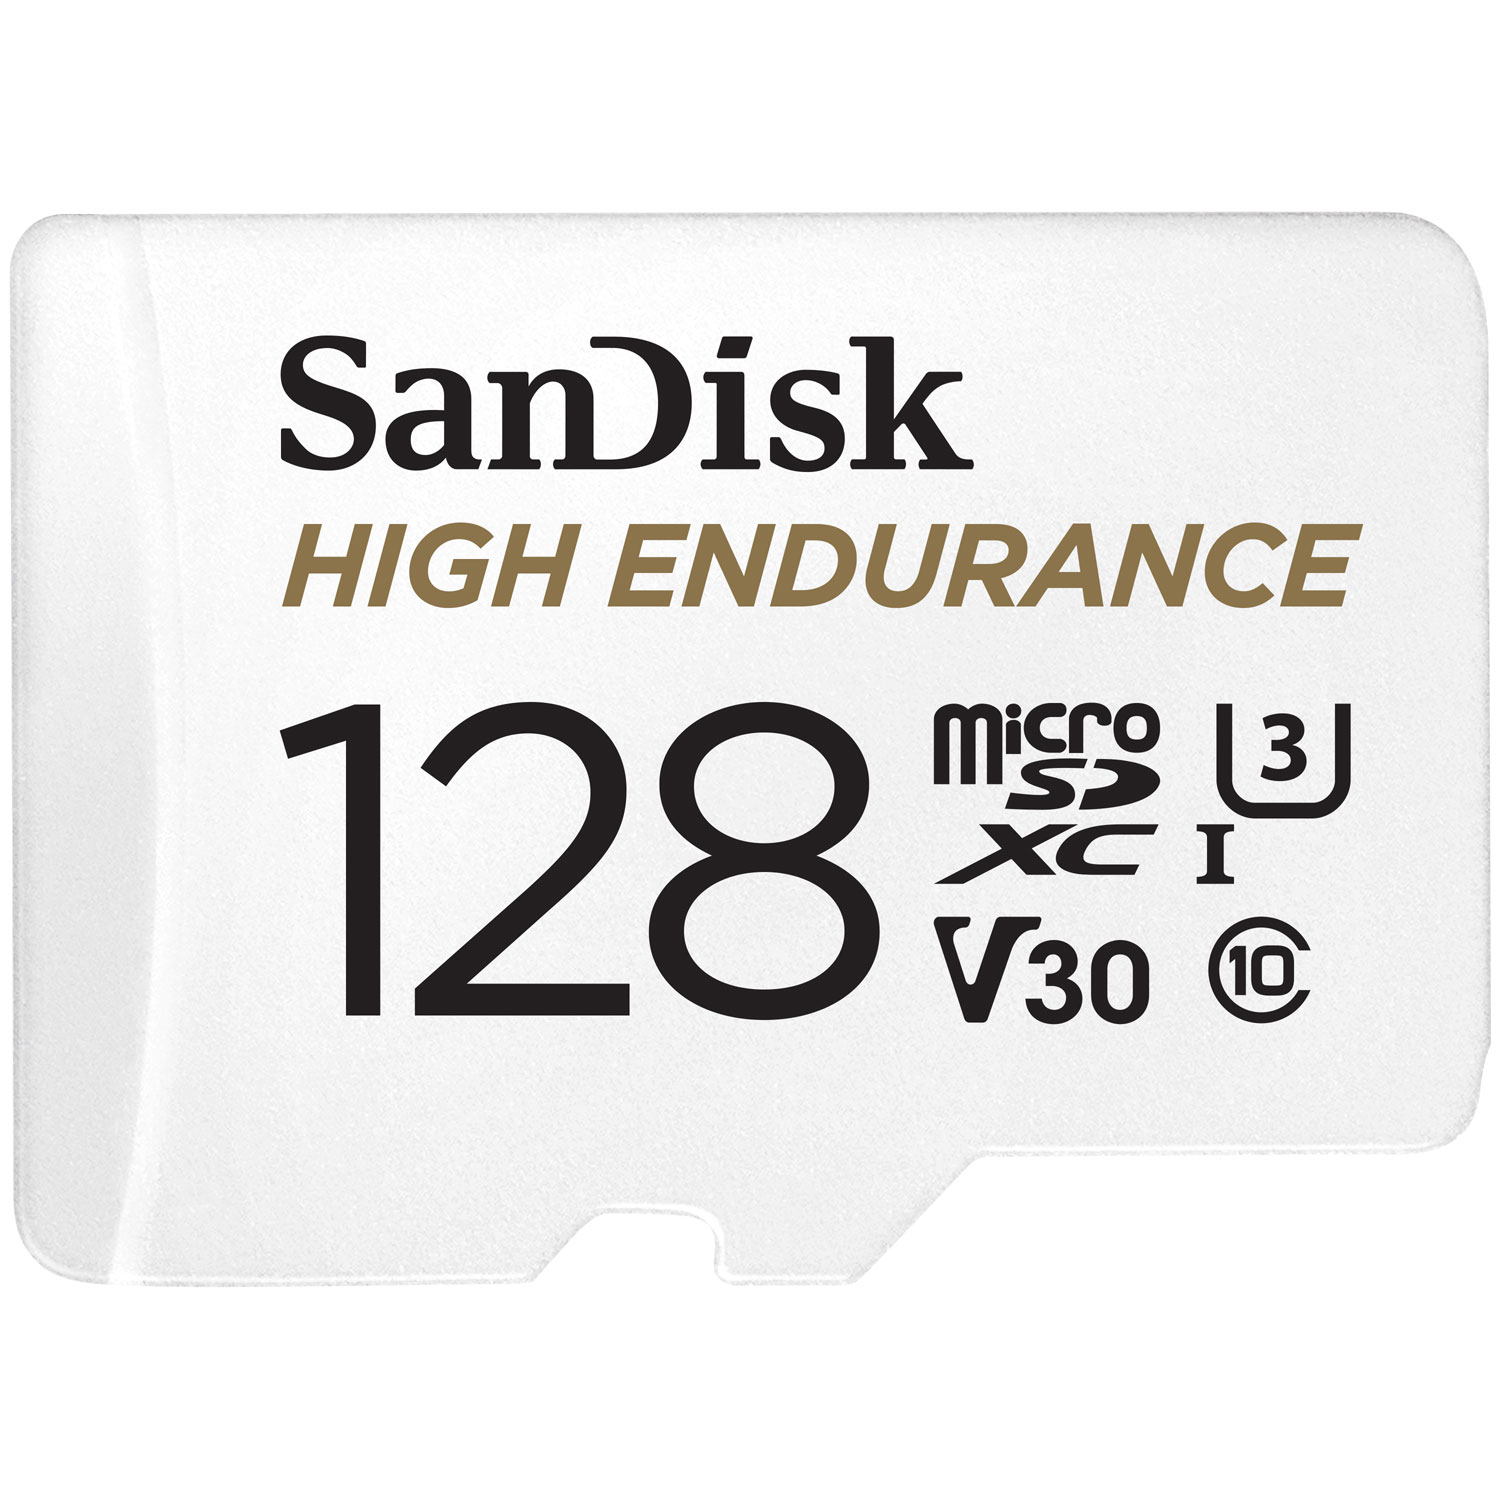 SanDisk High Endurance 128GB 100MB/s microSDXC Memory Card